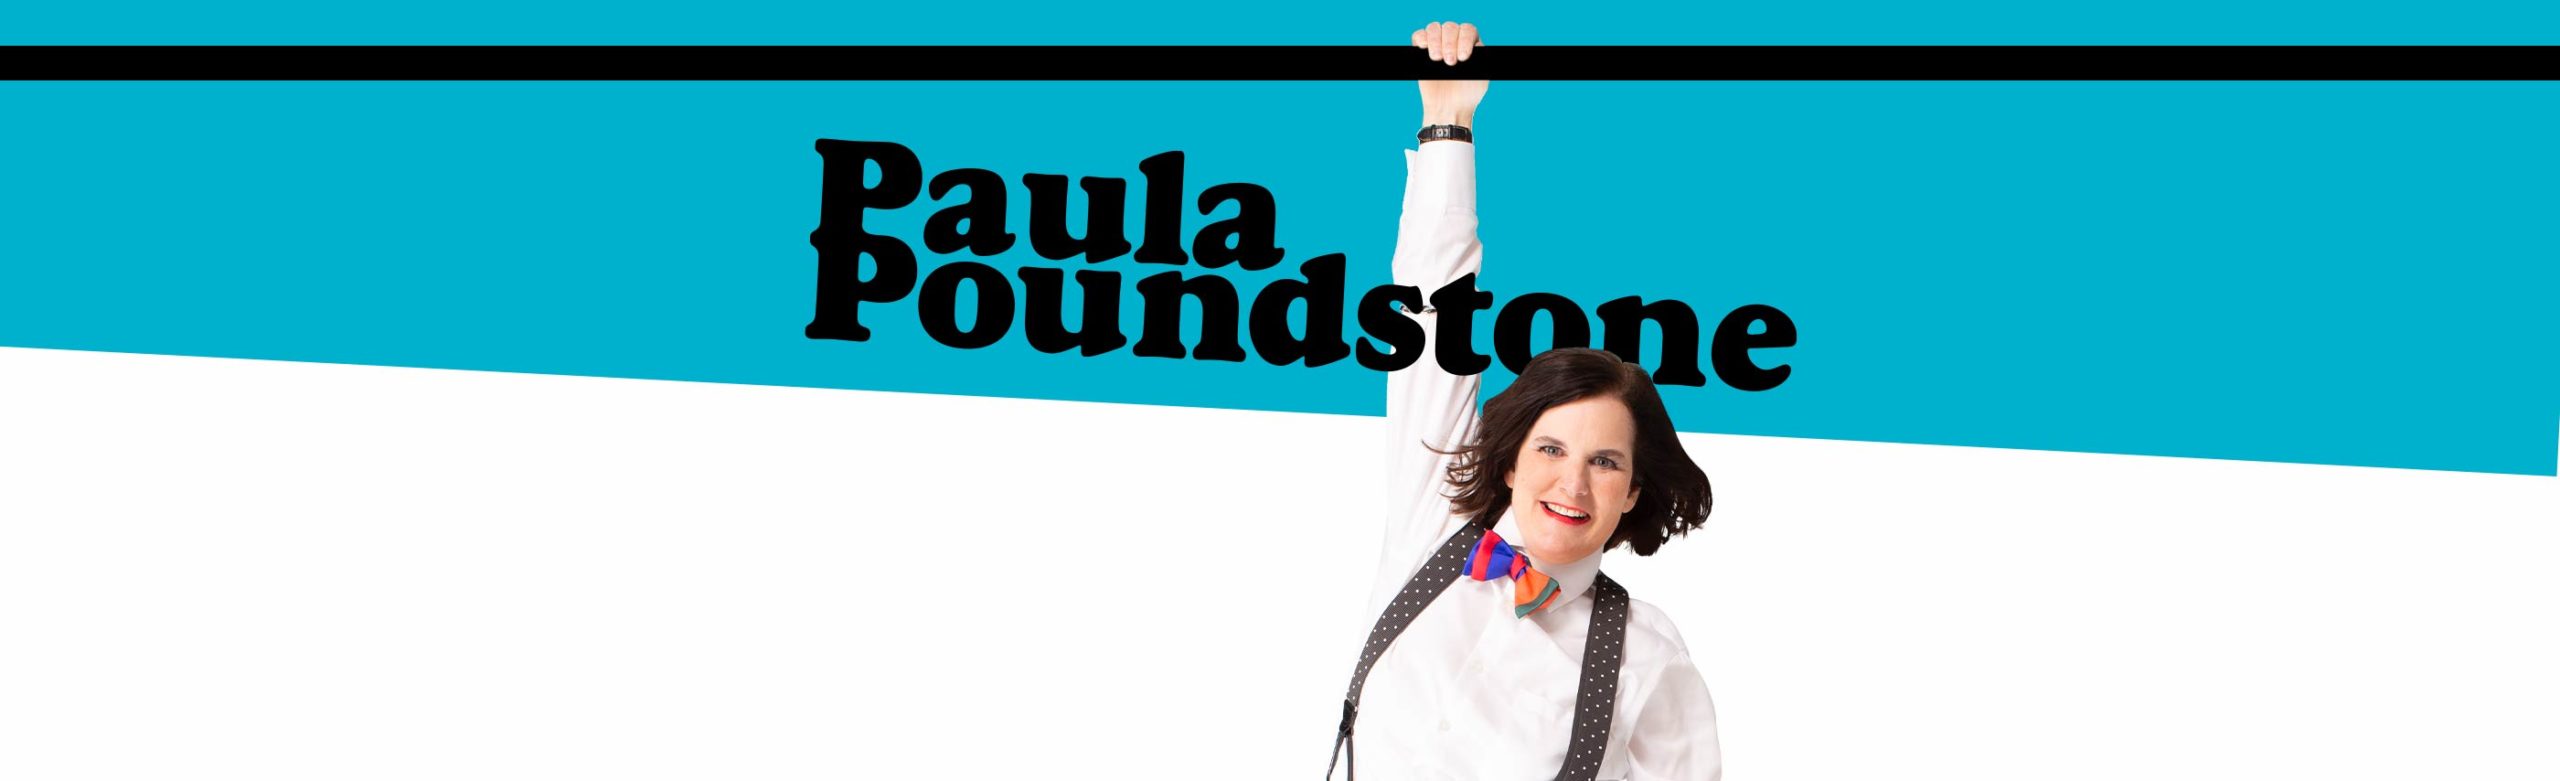 Comedian Paula Poundstone Announces Show in Missoula Image